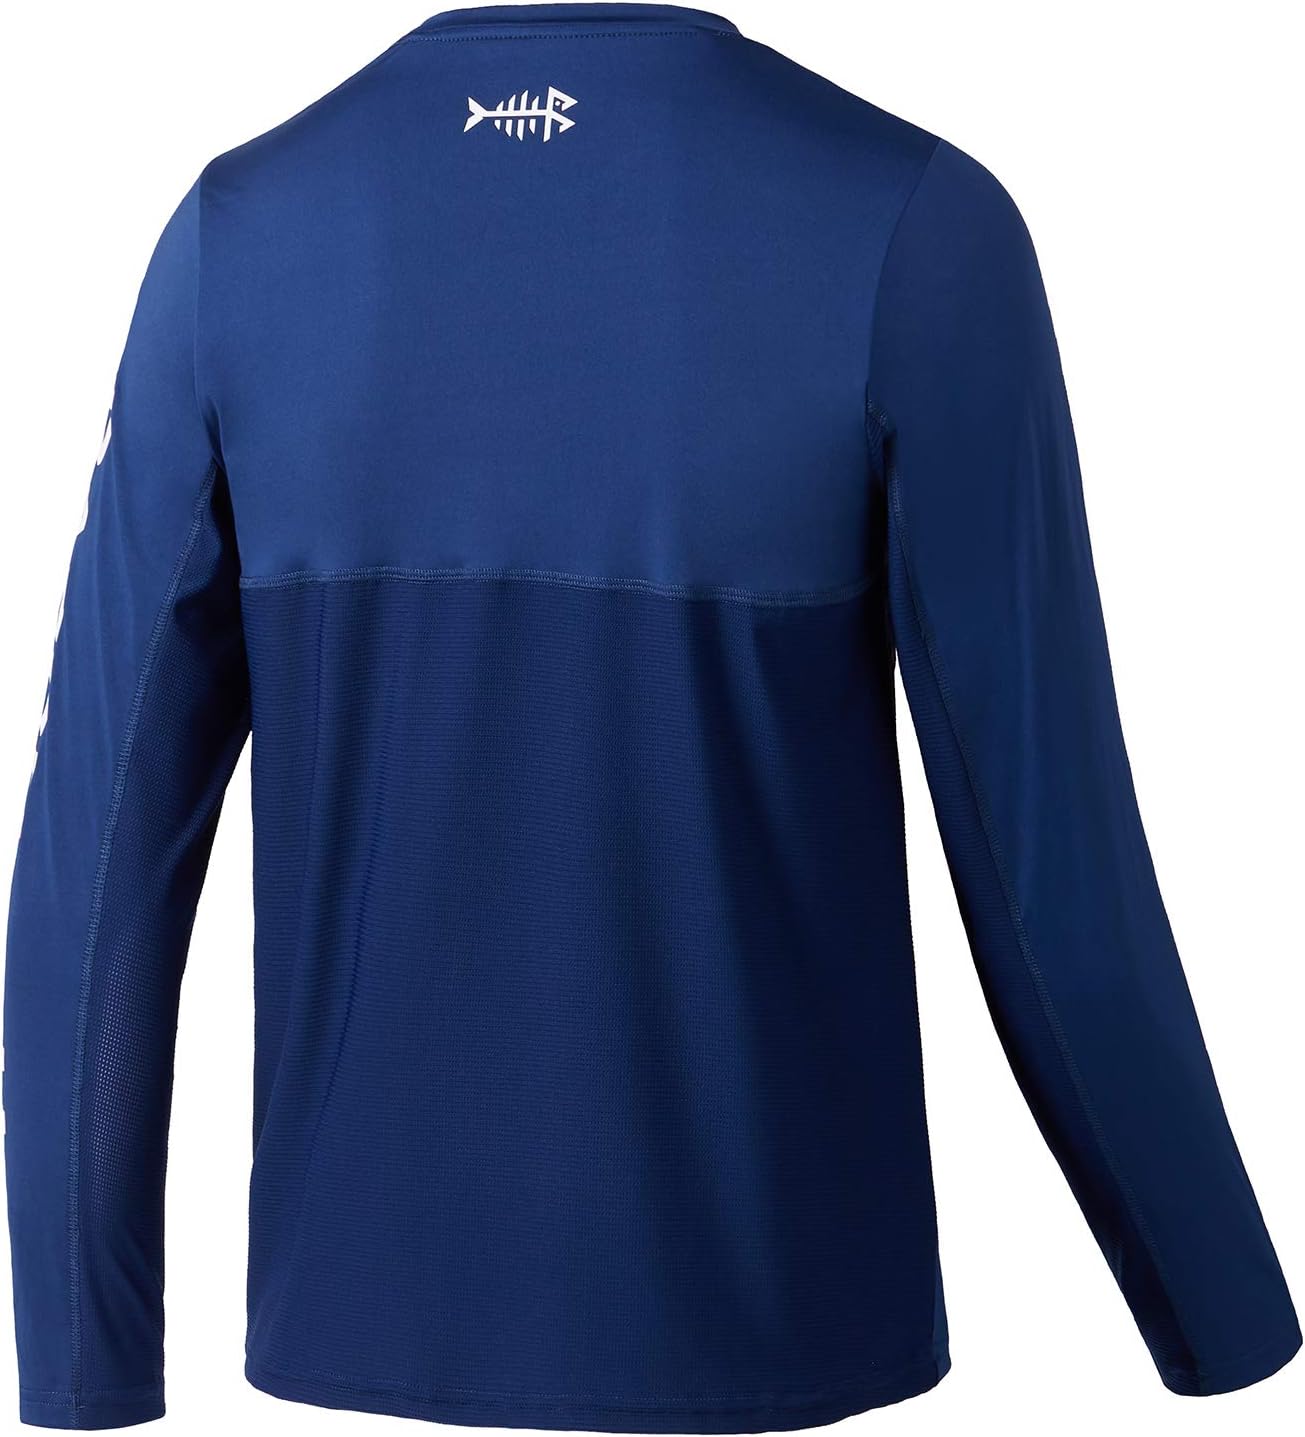 BASSDASH Youth Fishing T Shirts UPF 50+ Long Sleeve Performance UV